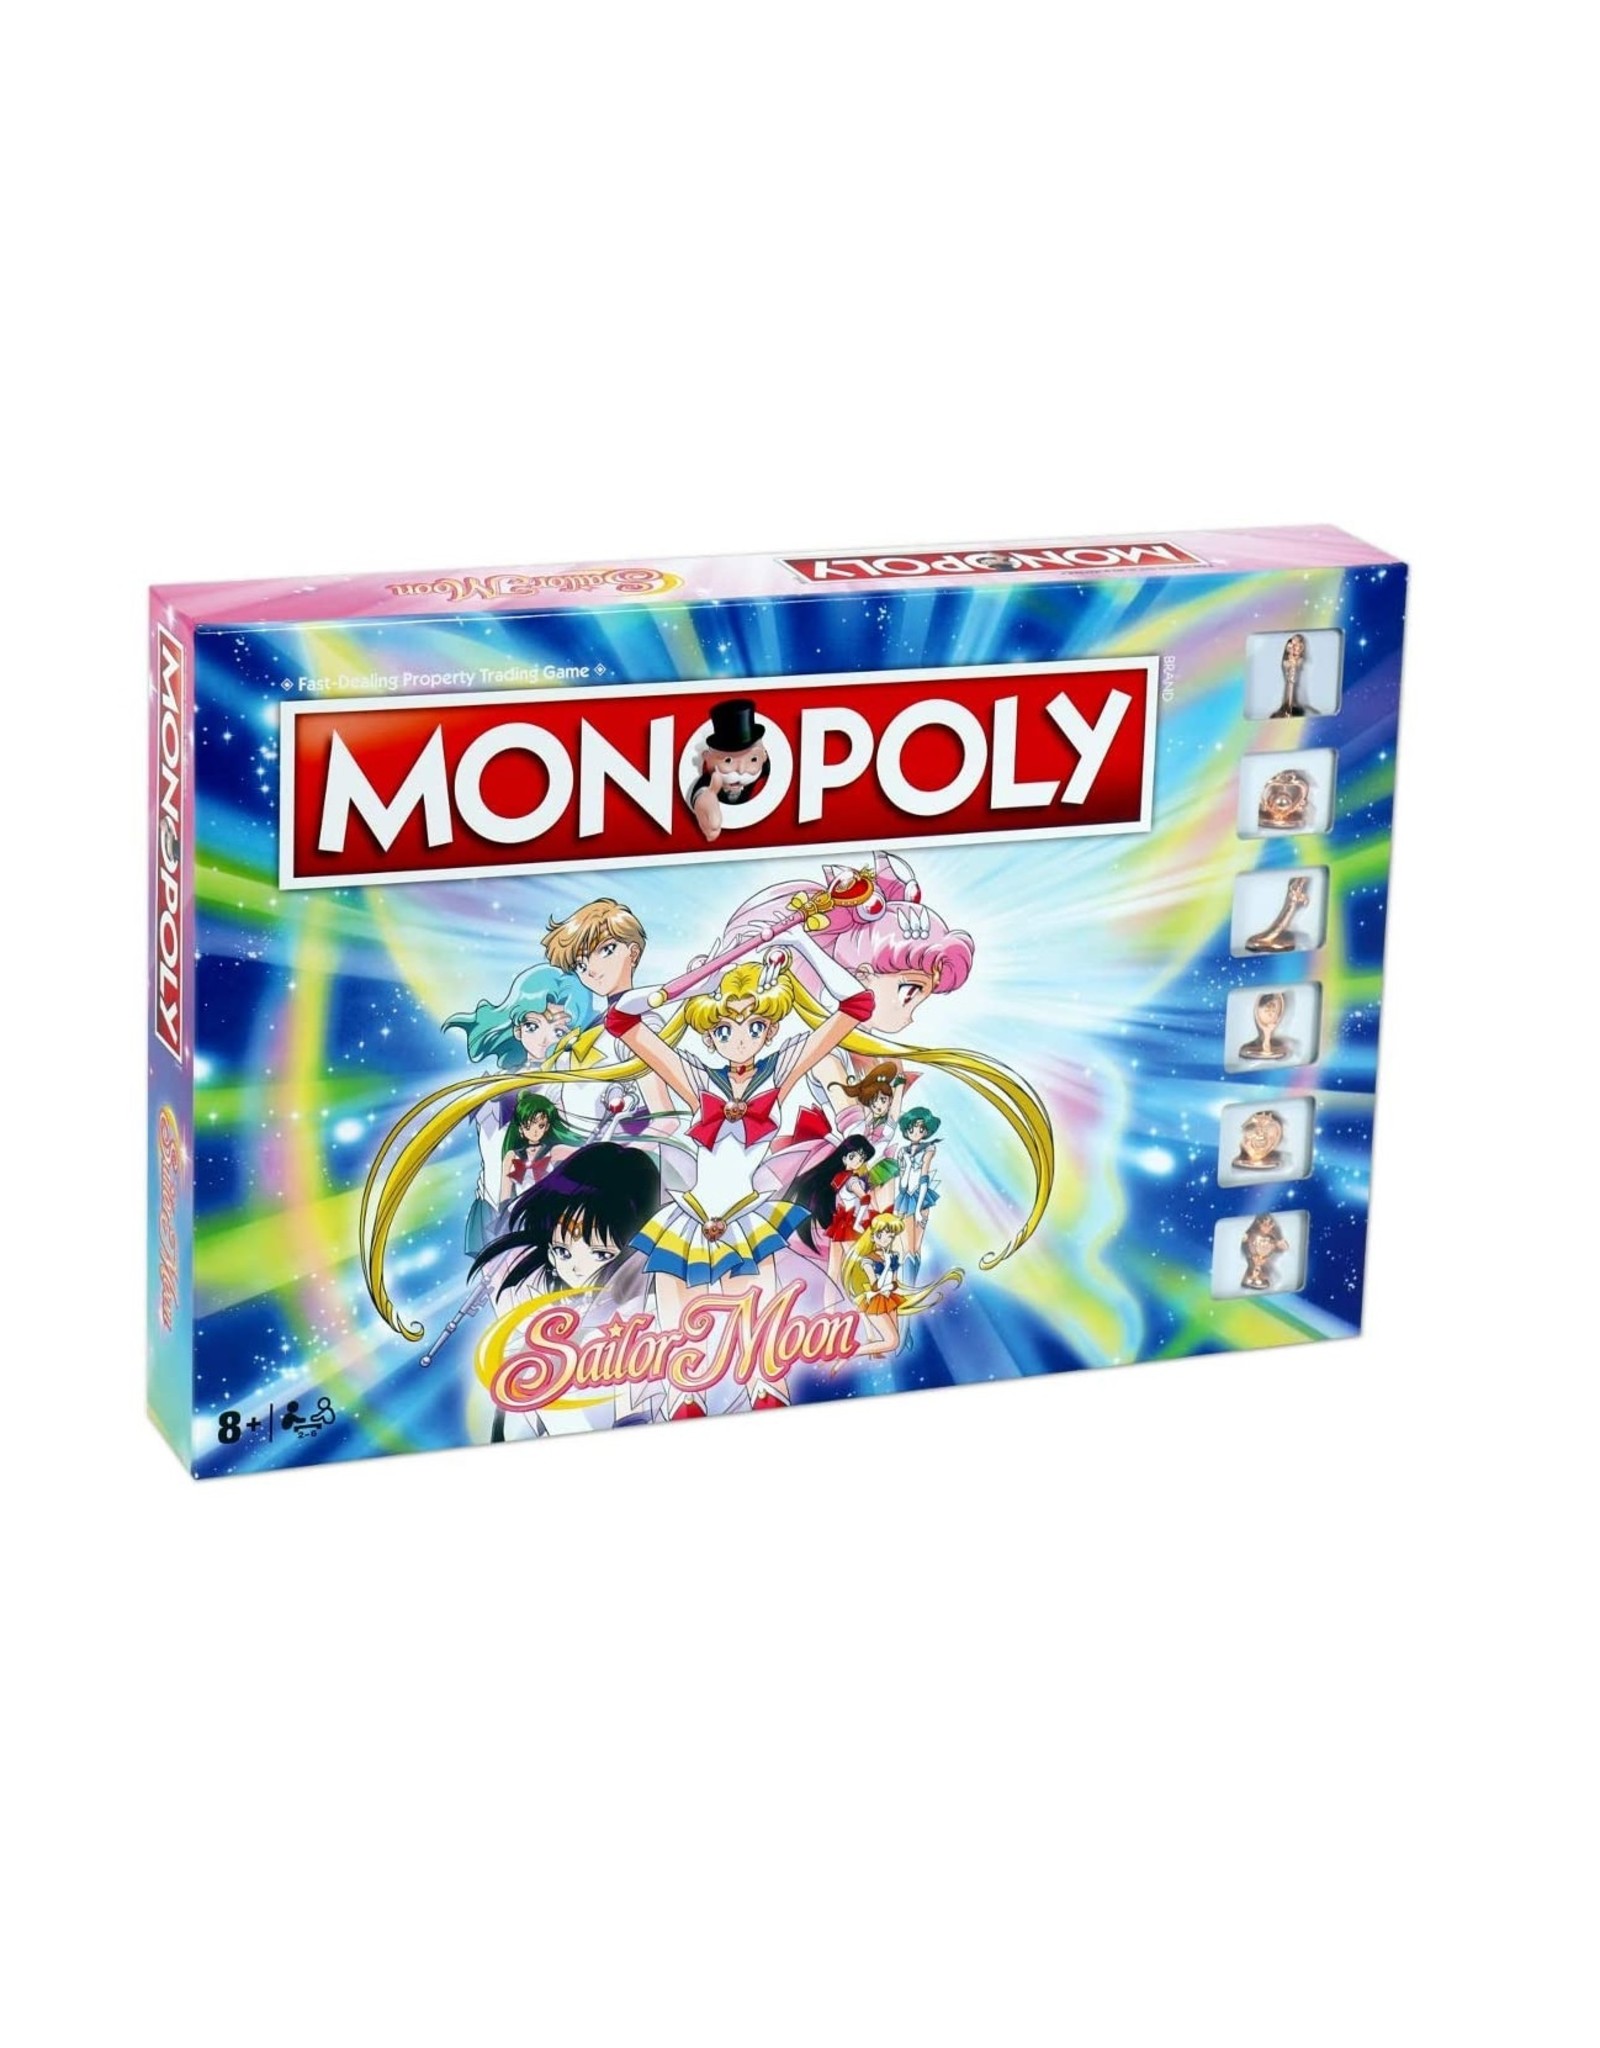 Monopoly Monopoly - Sailor Moon - Board game - English version